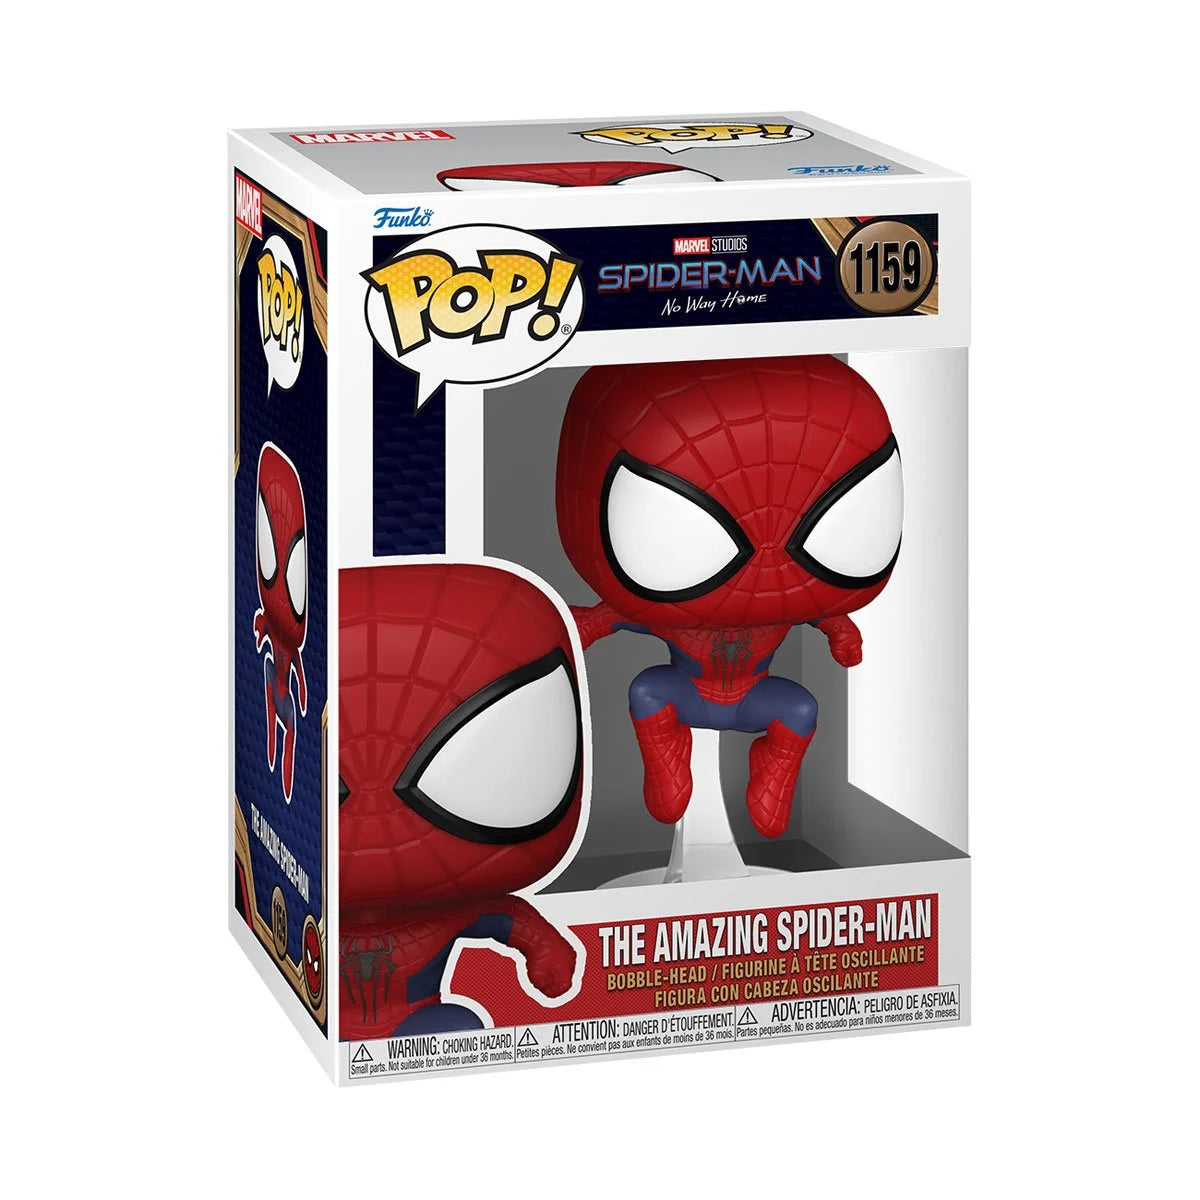 The Amazing Spider-Man No Way Home  Pop! Vinyl Figure